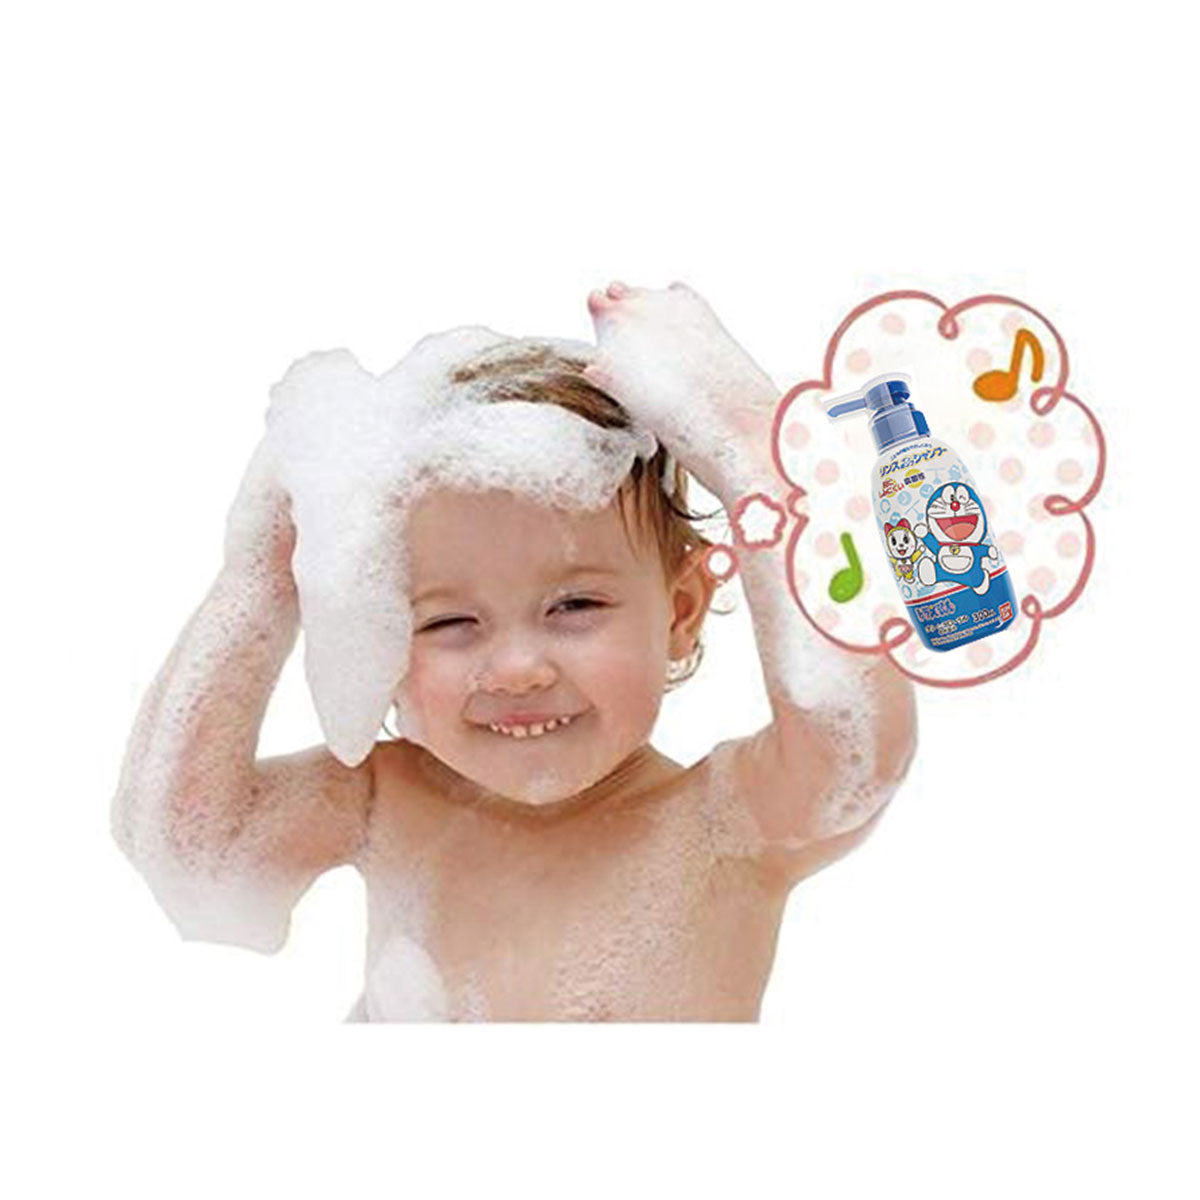 Rinse-in Pump Shampoo #Doraemon 300ml